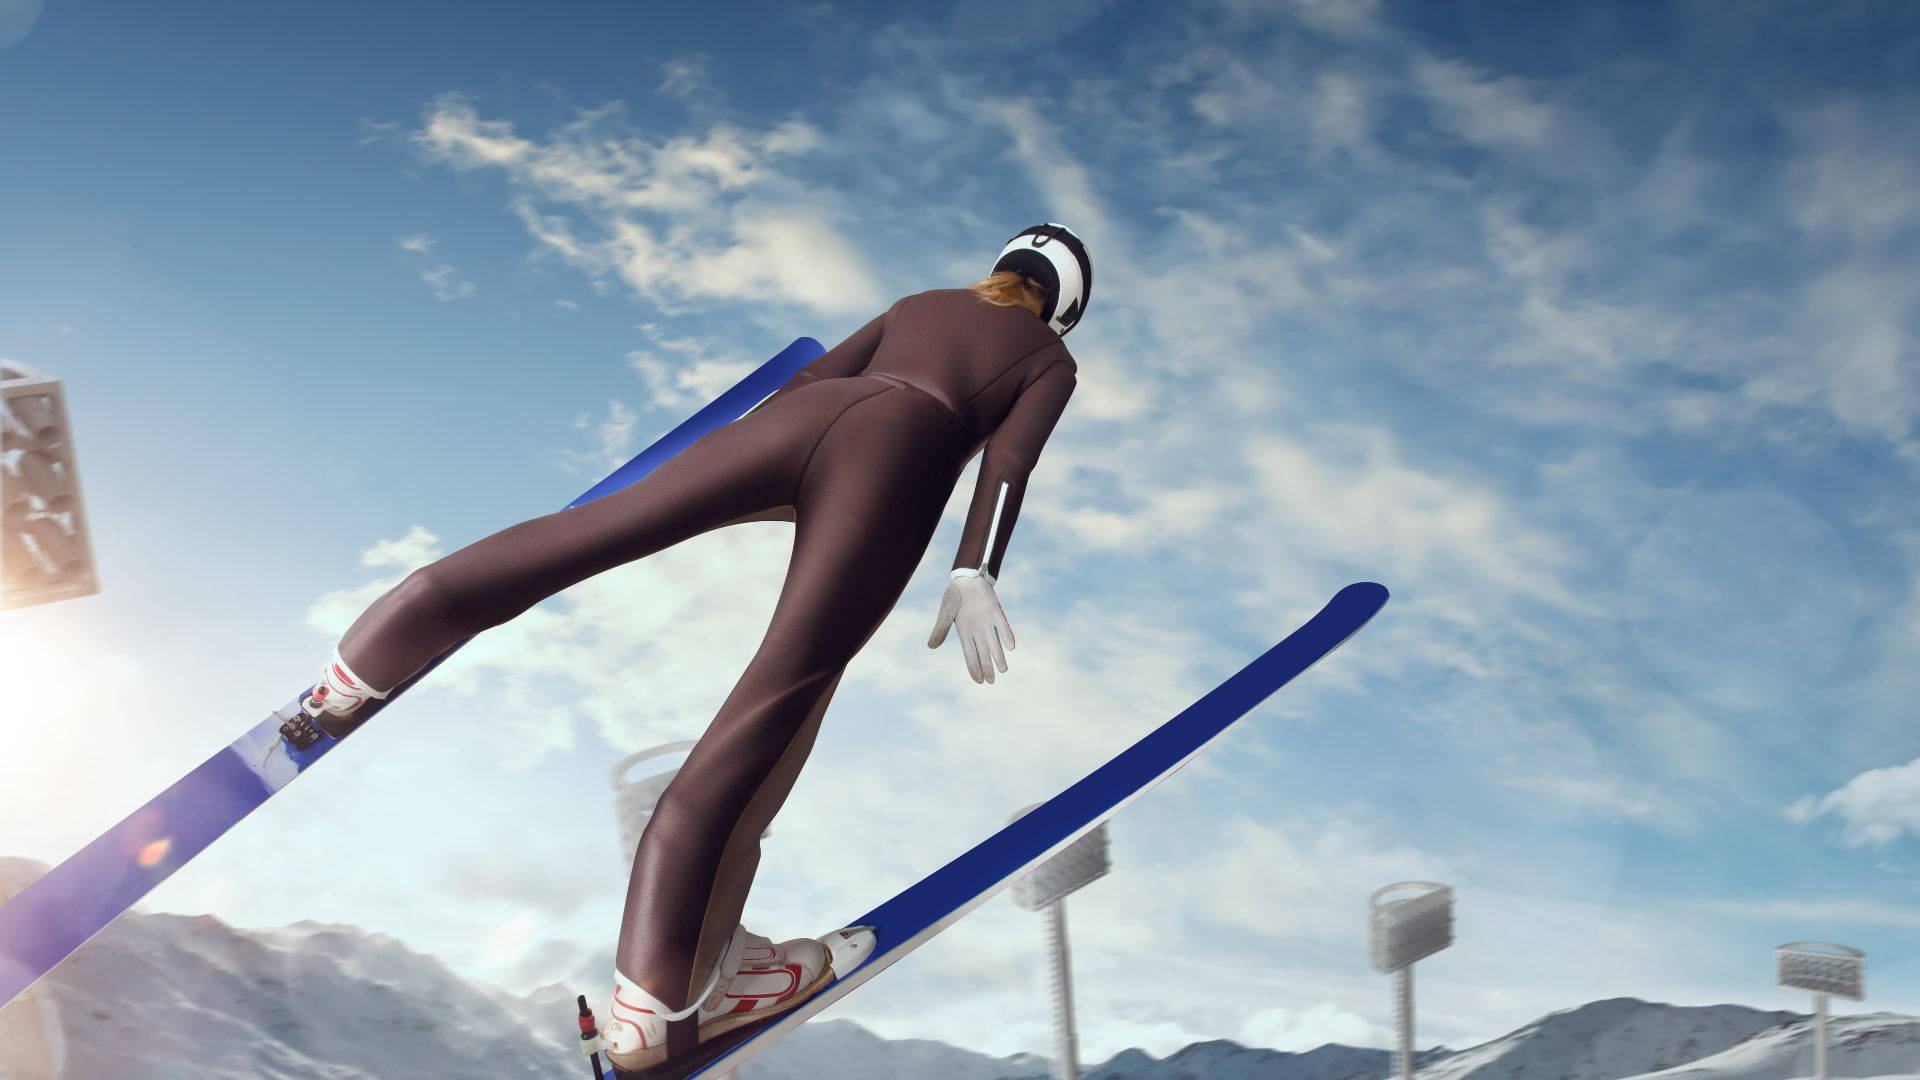 Ski Jumping Sports Game Background